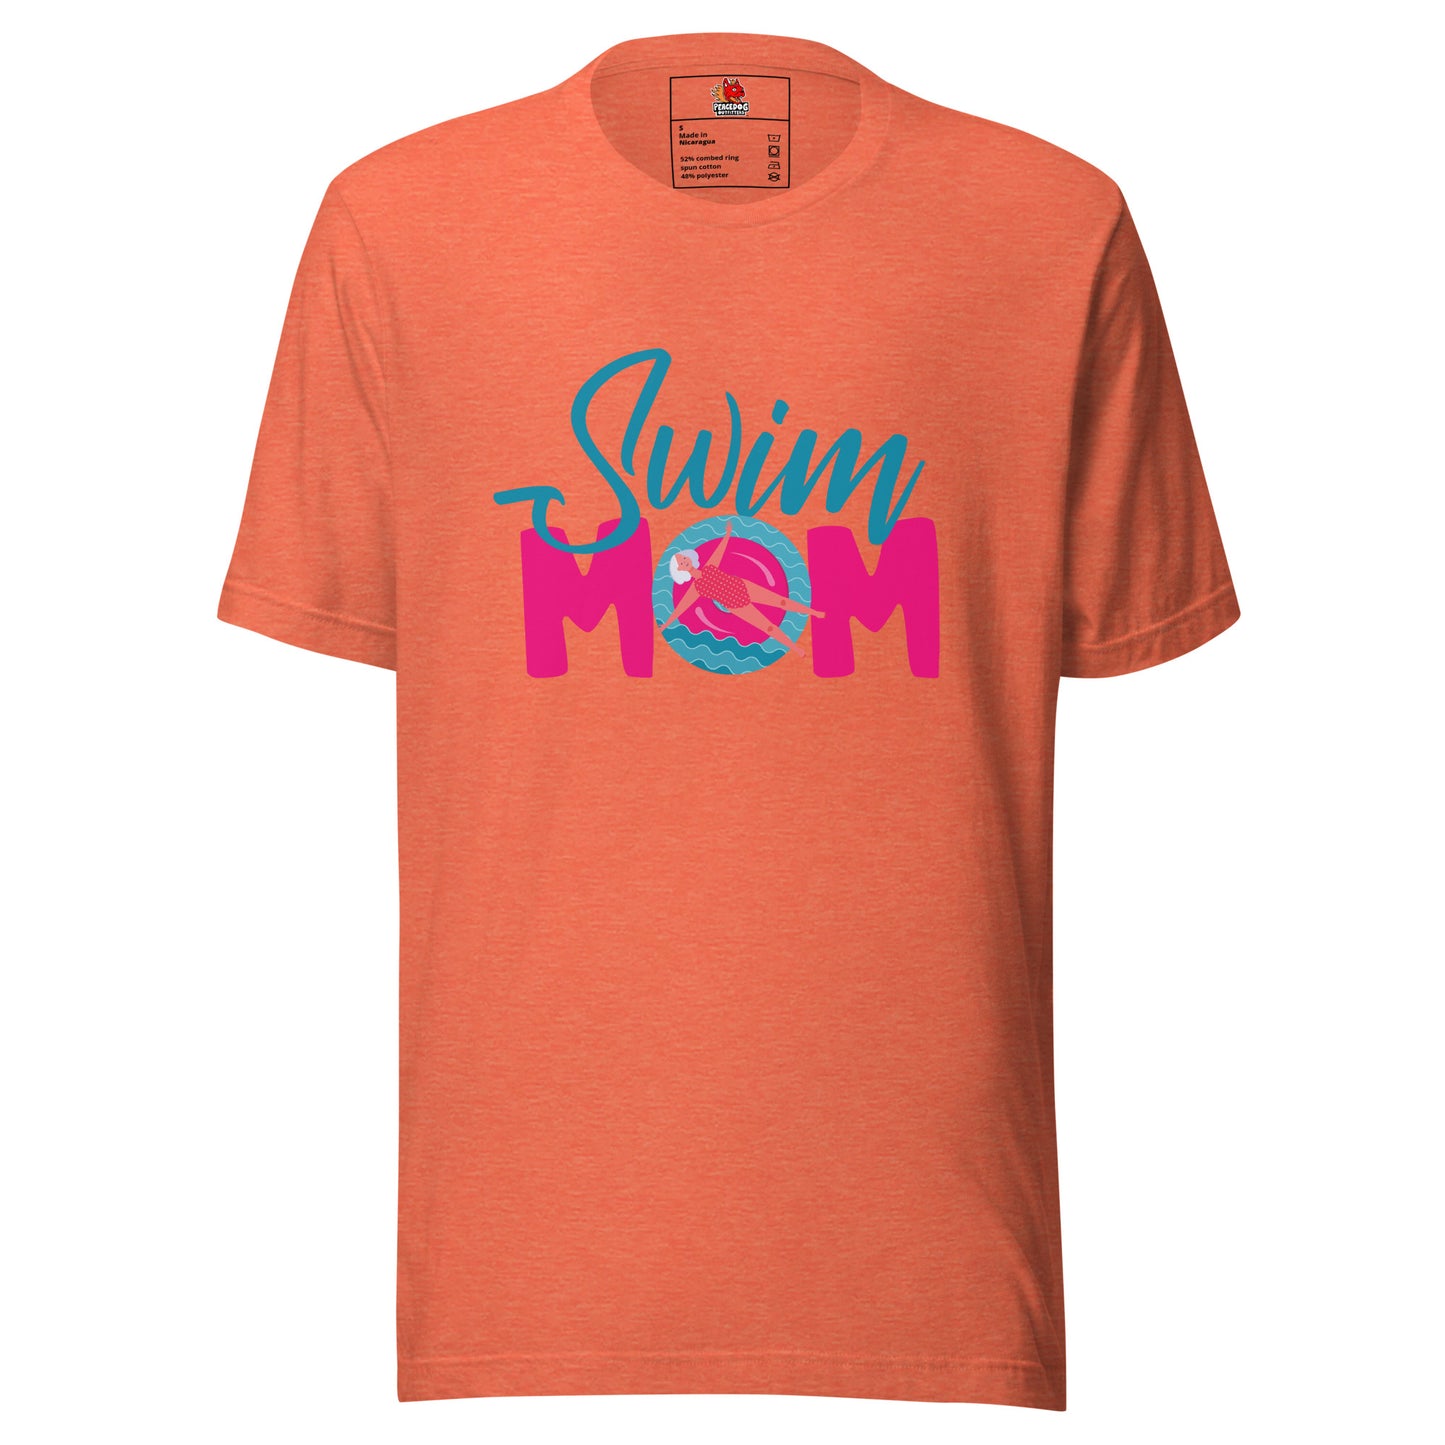 Swim Mom T-shirt